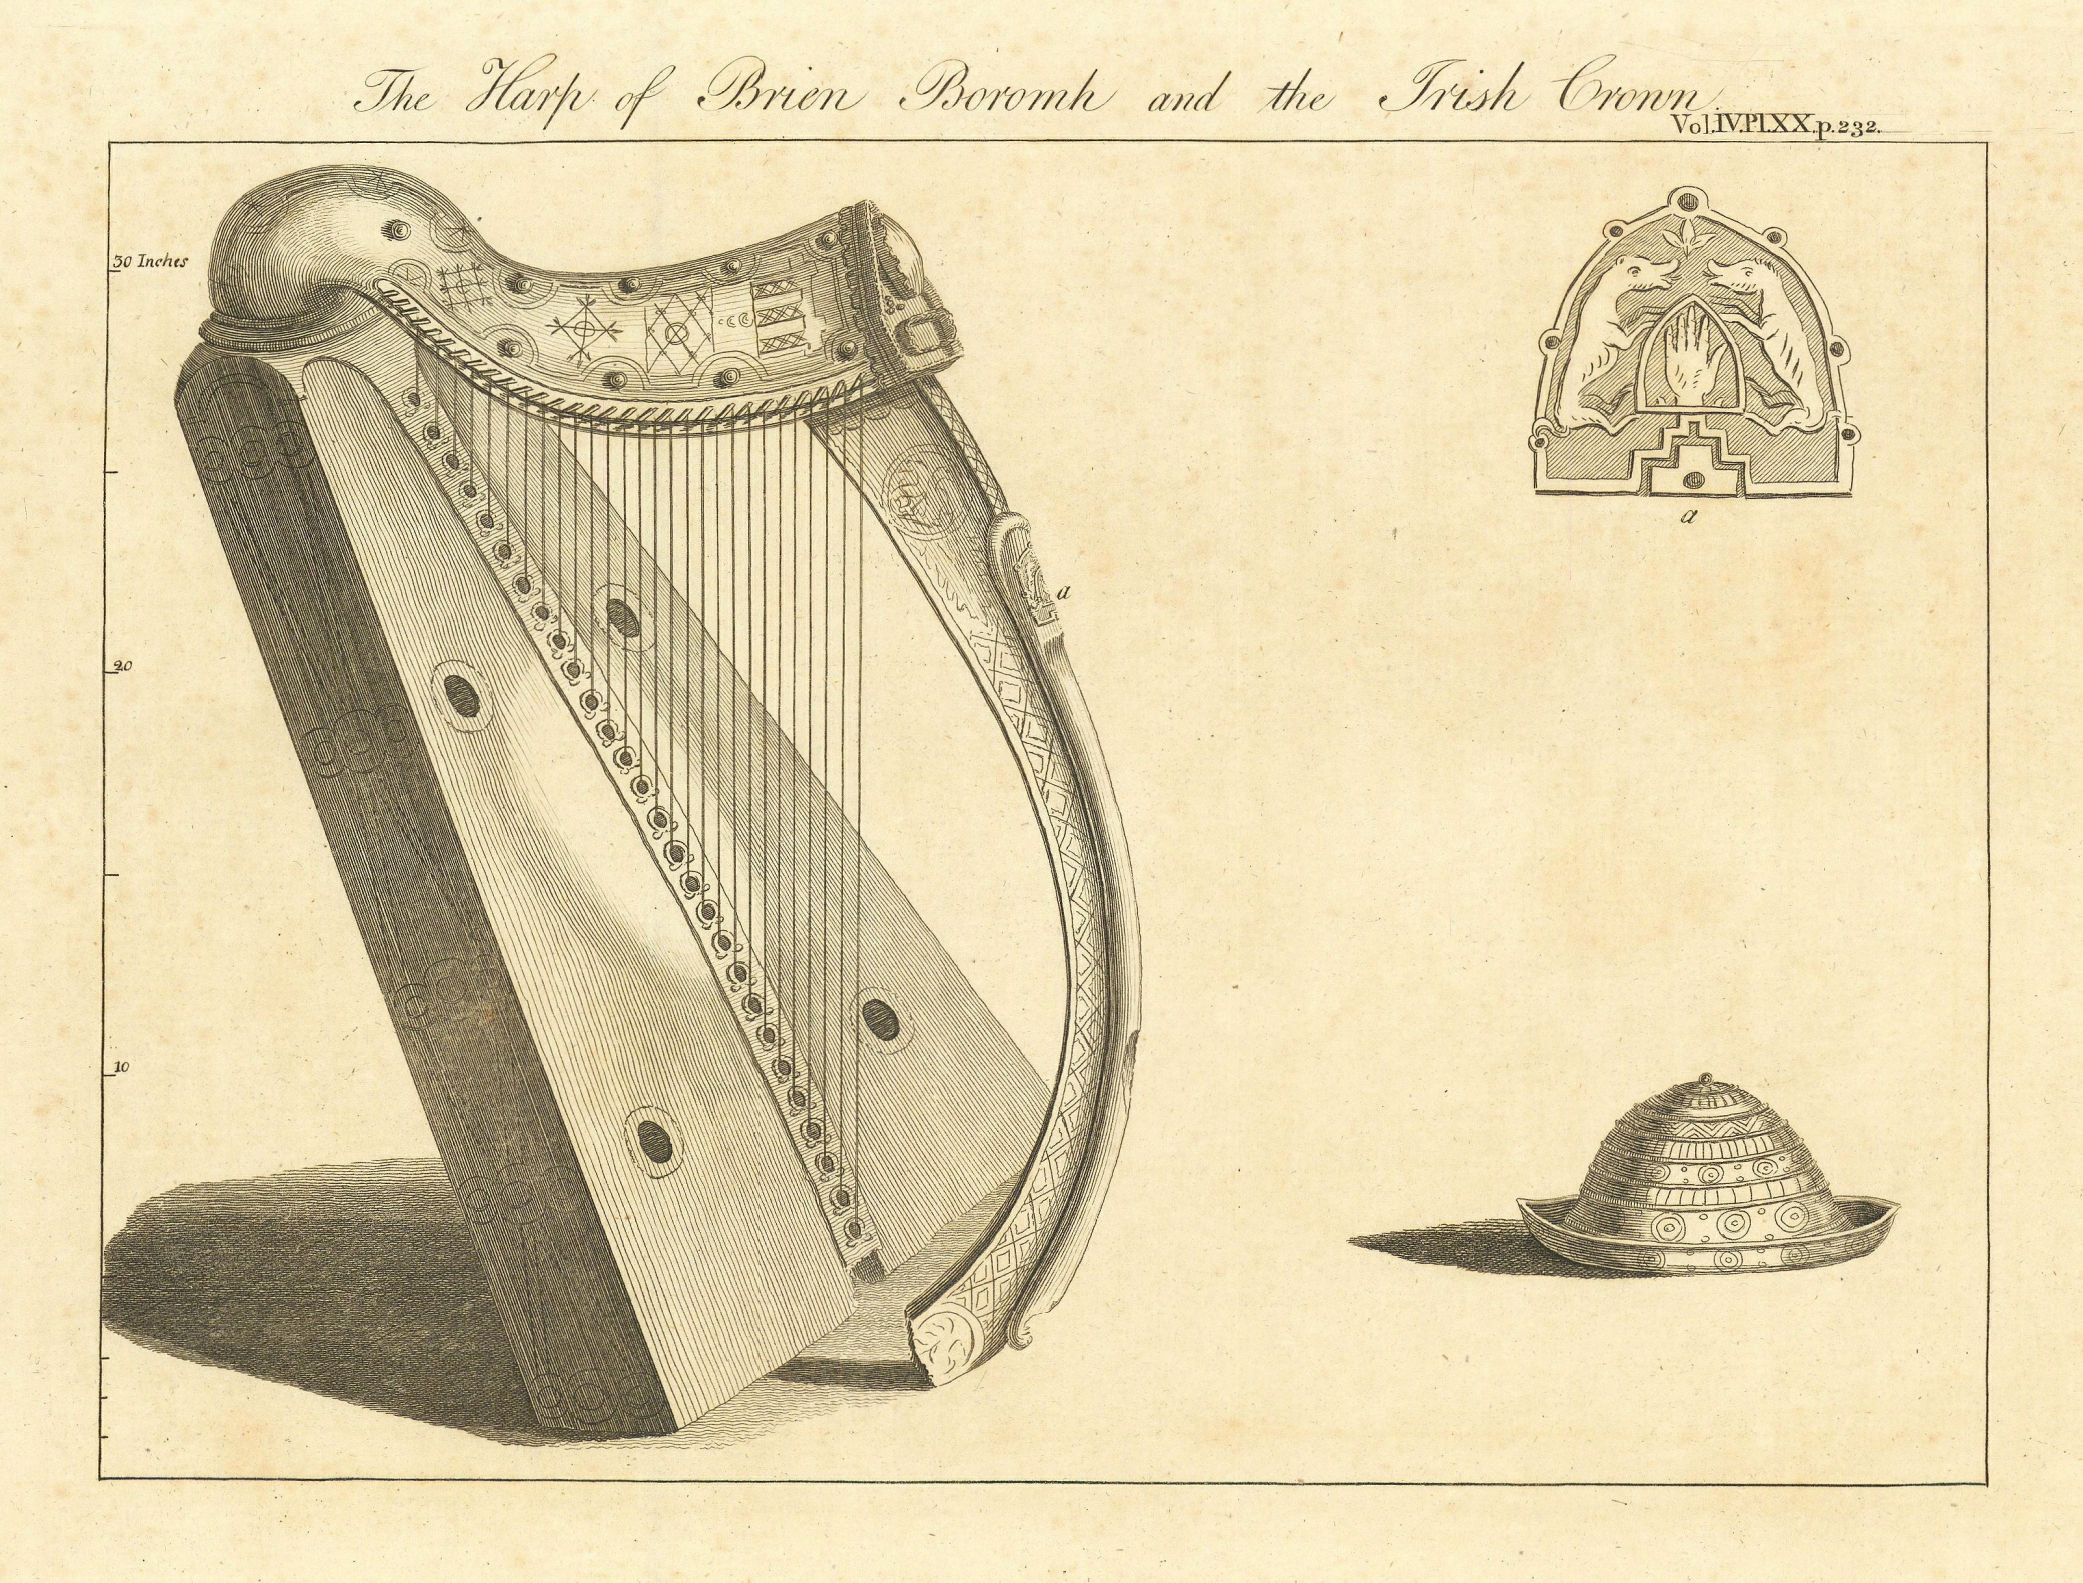 Associate Product Trinity College harp. Brien Boromh Brian Boru. The Irish Crown 1806 old print